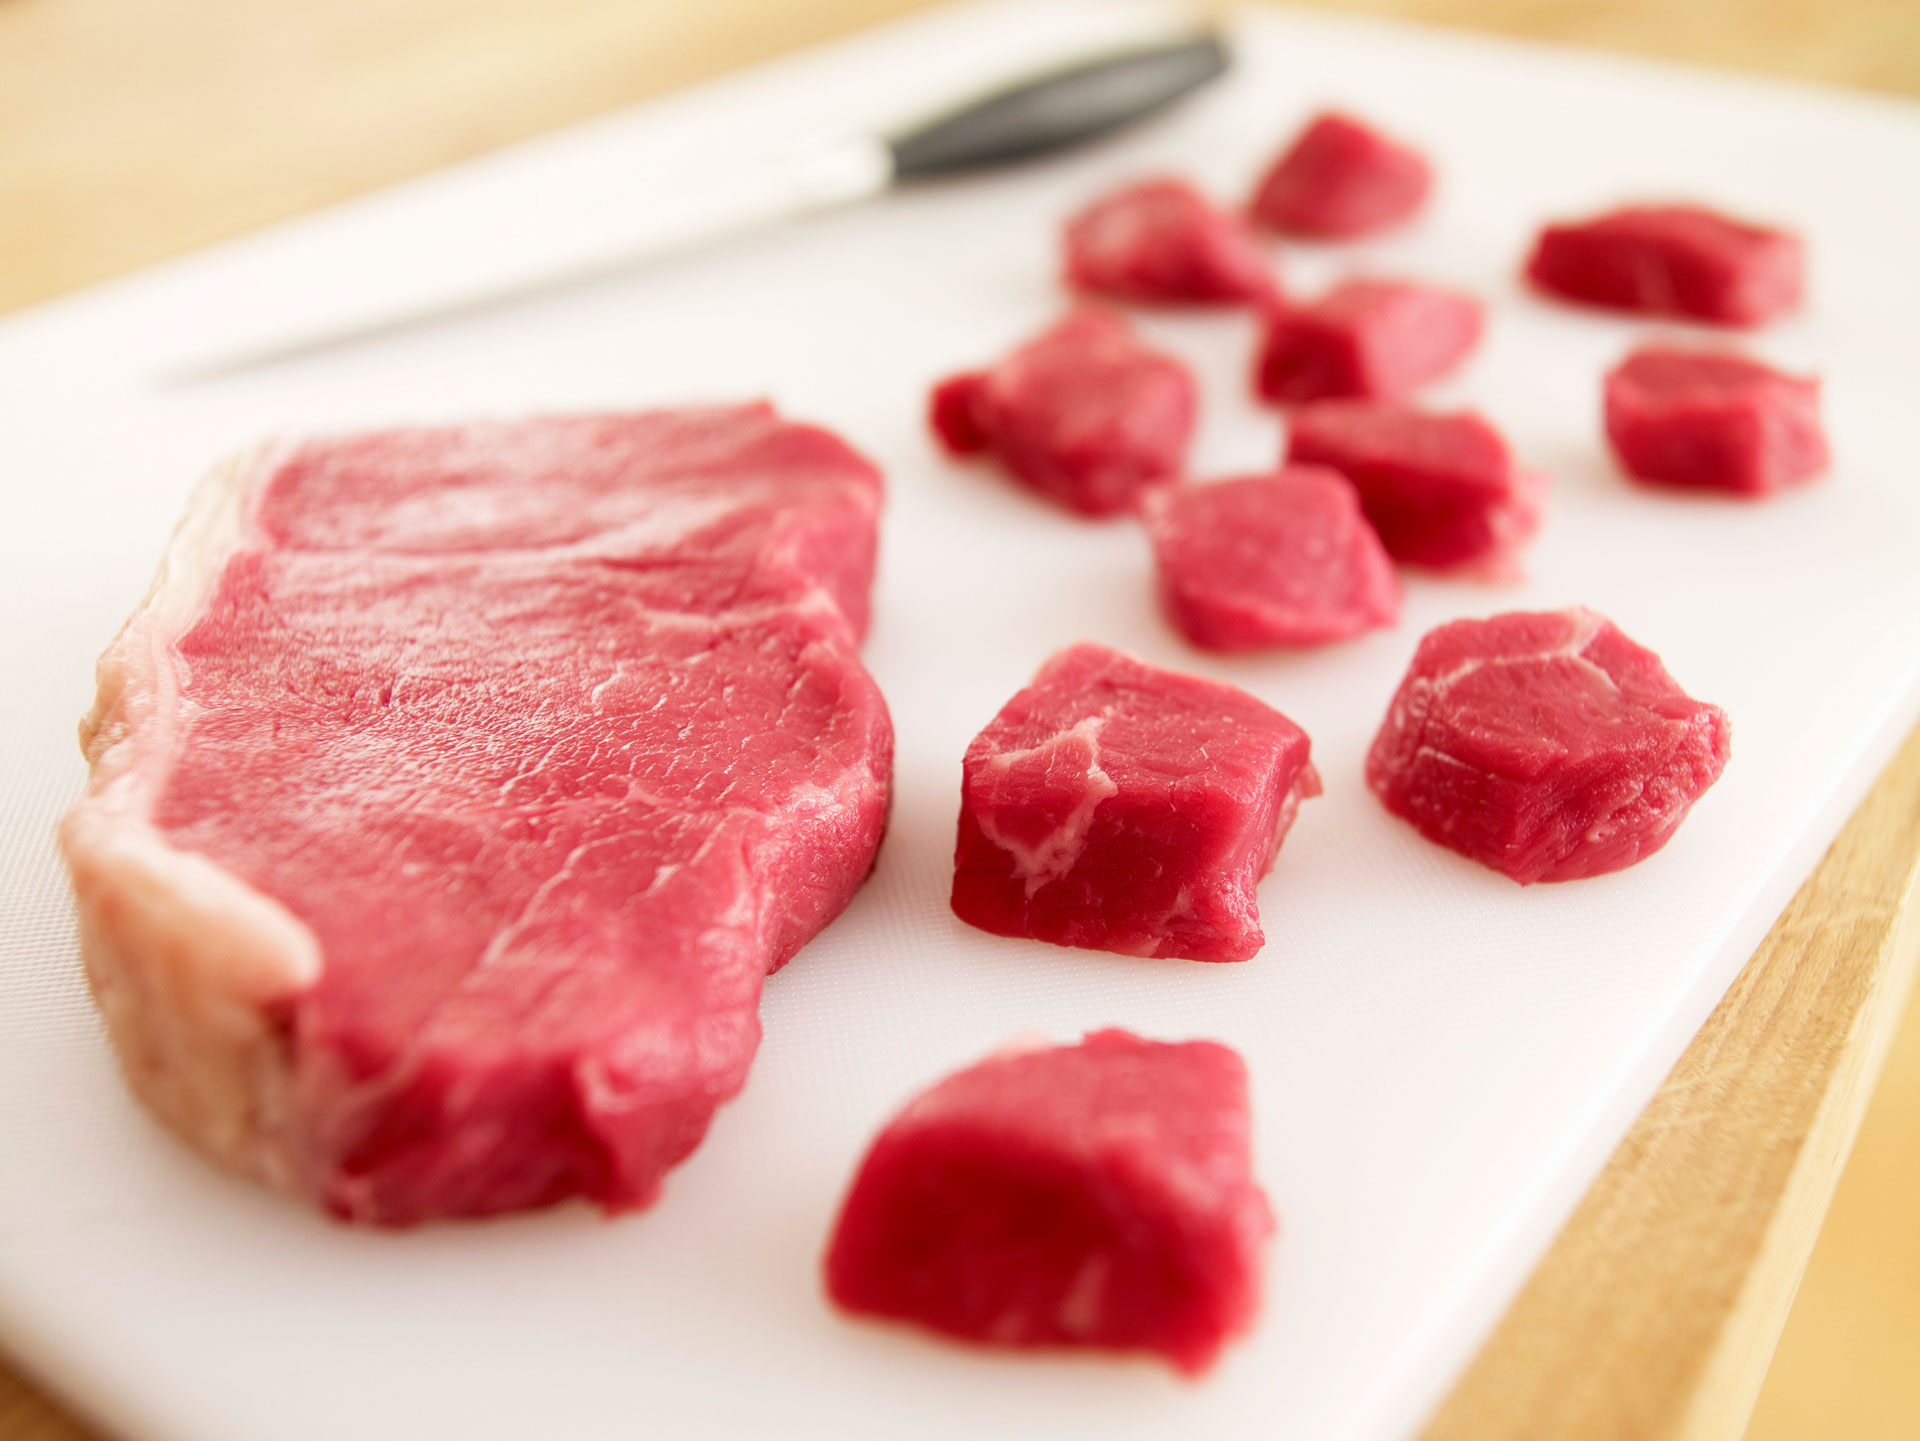 Мясо сырое купить. Кусочки мяса. Мясо говядина. Оценка качества мяса.